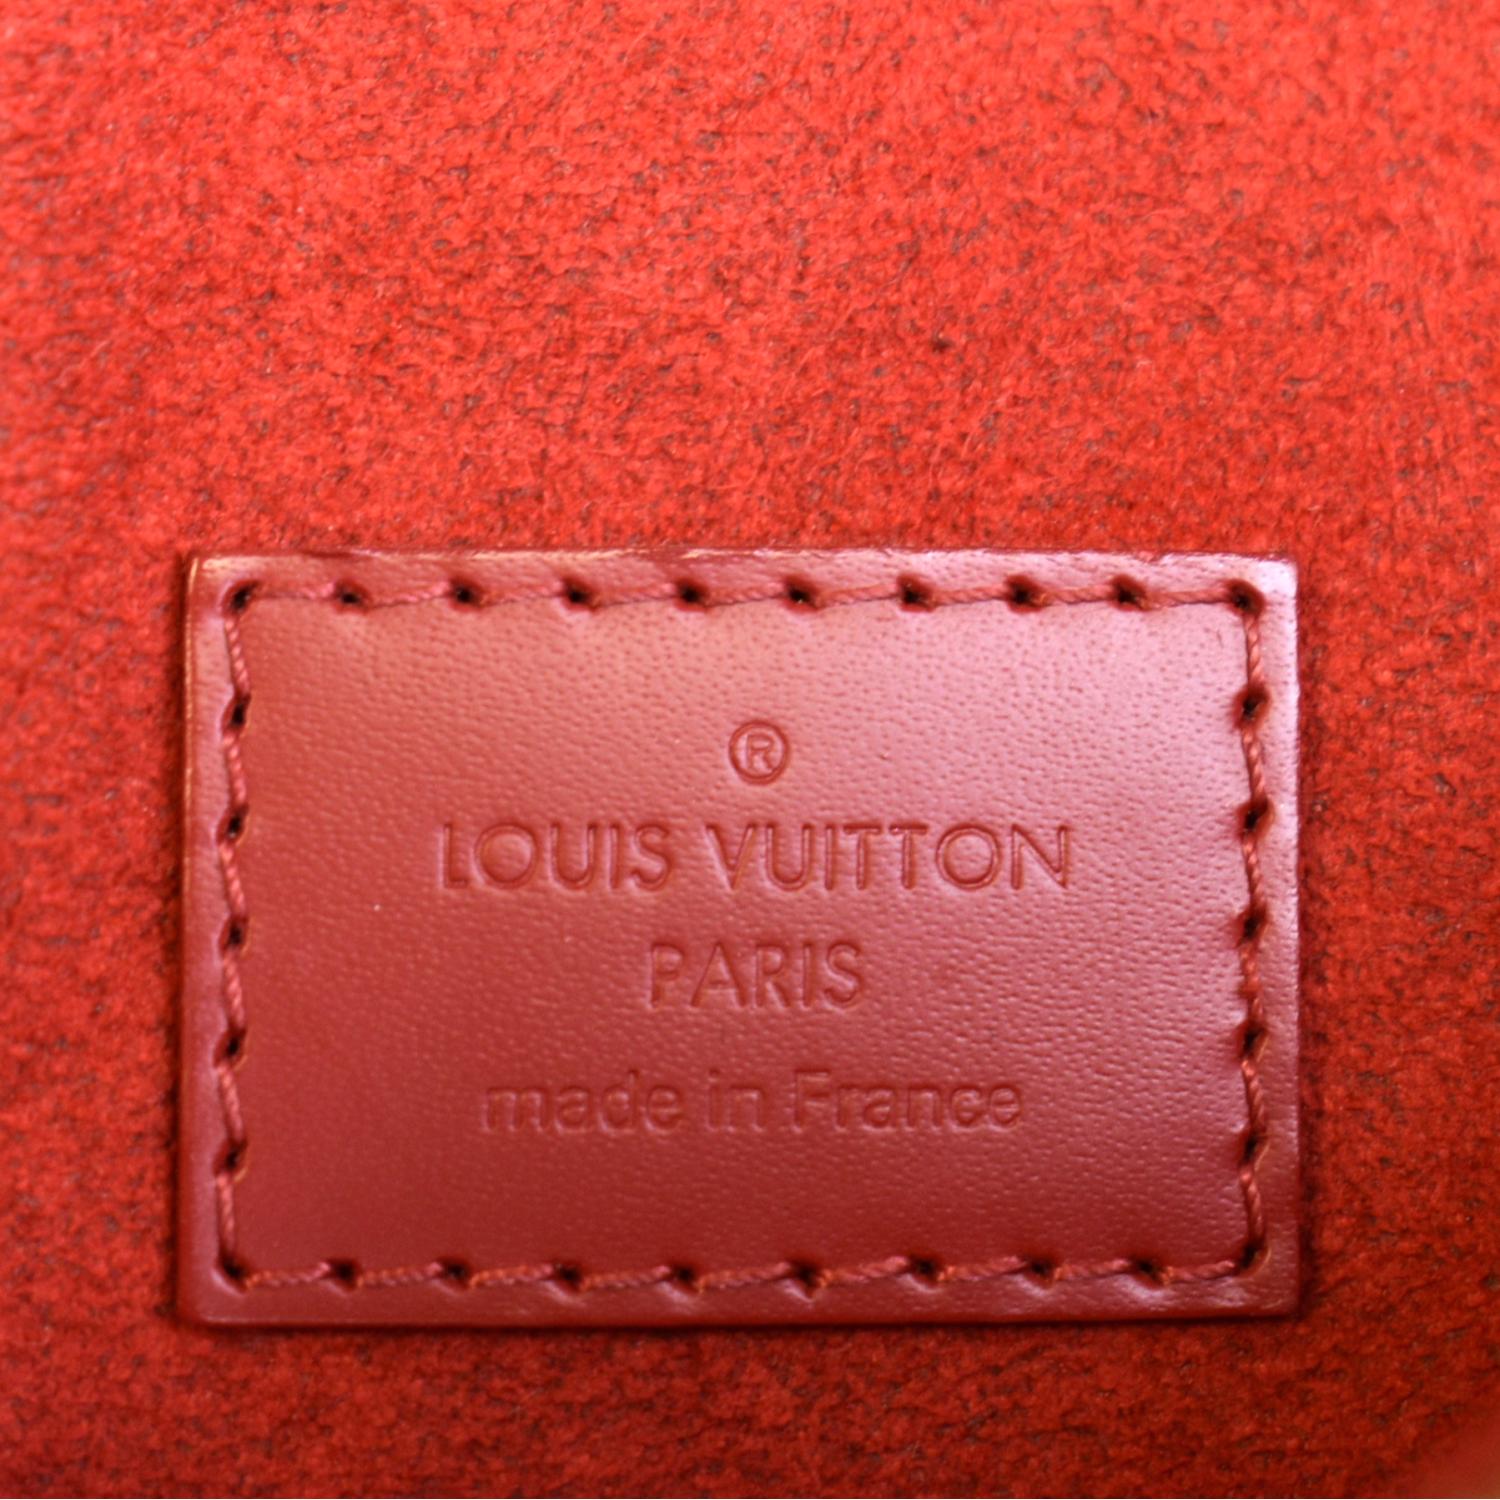 A Closer Look: Louis Vuitton Caissa Clutch With Chain